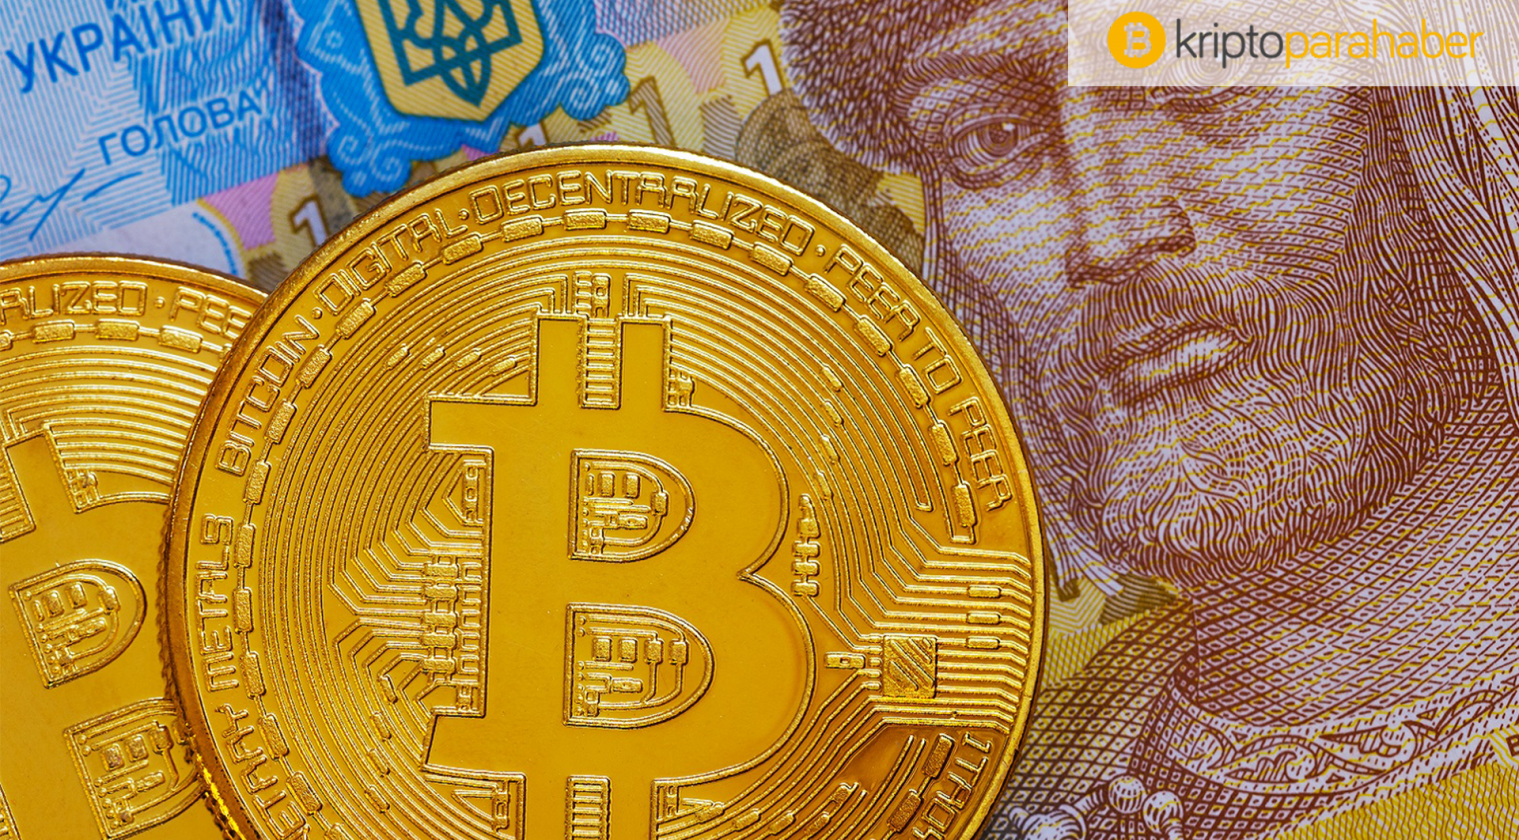 Ukrayna kripto para yasası çıkarUkrayna kripto para yasası çıkardı.